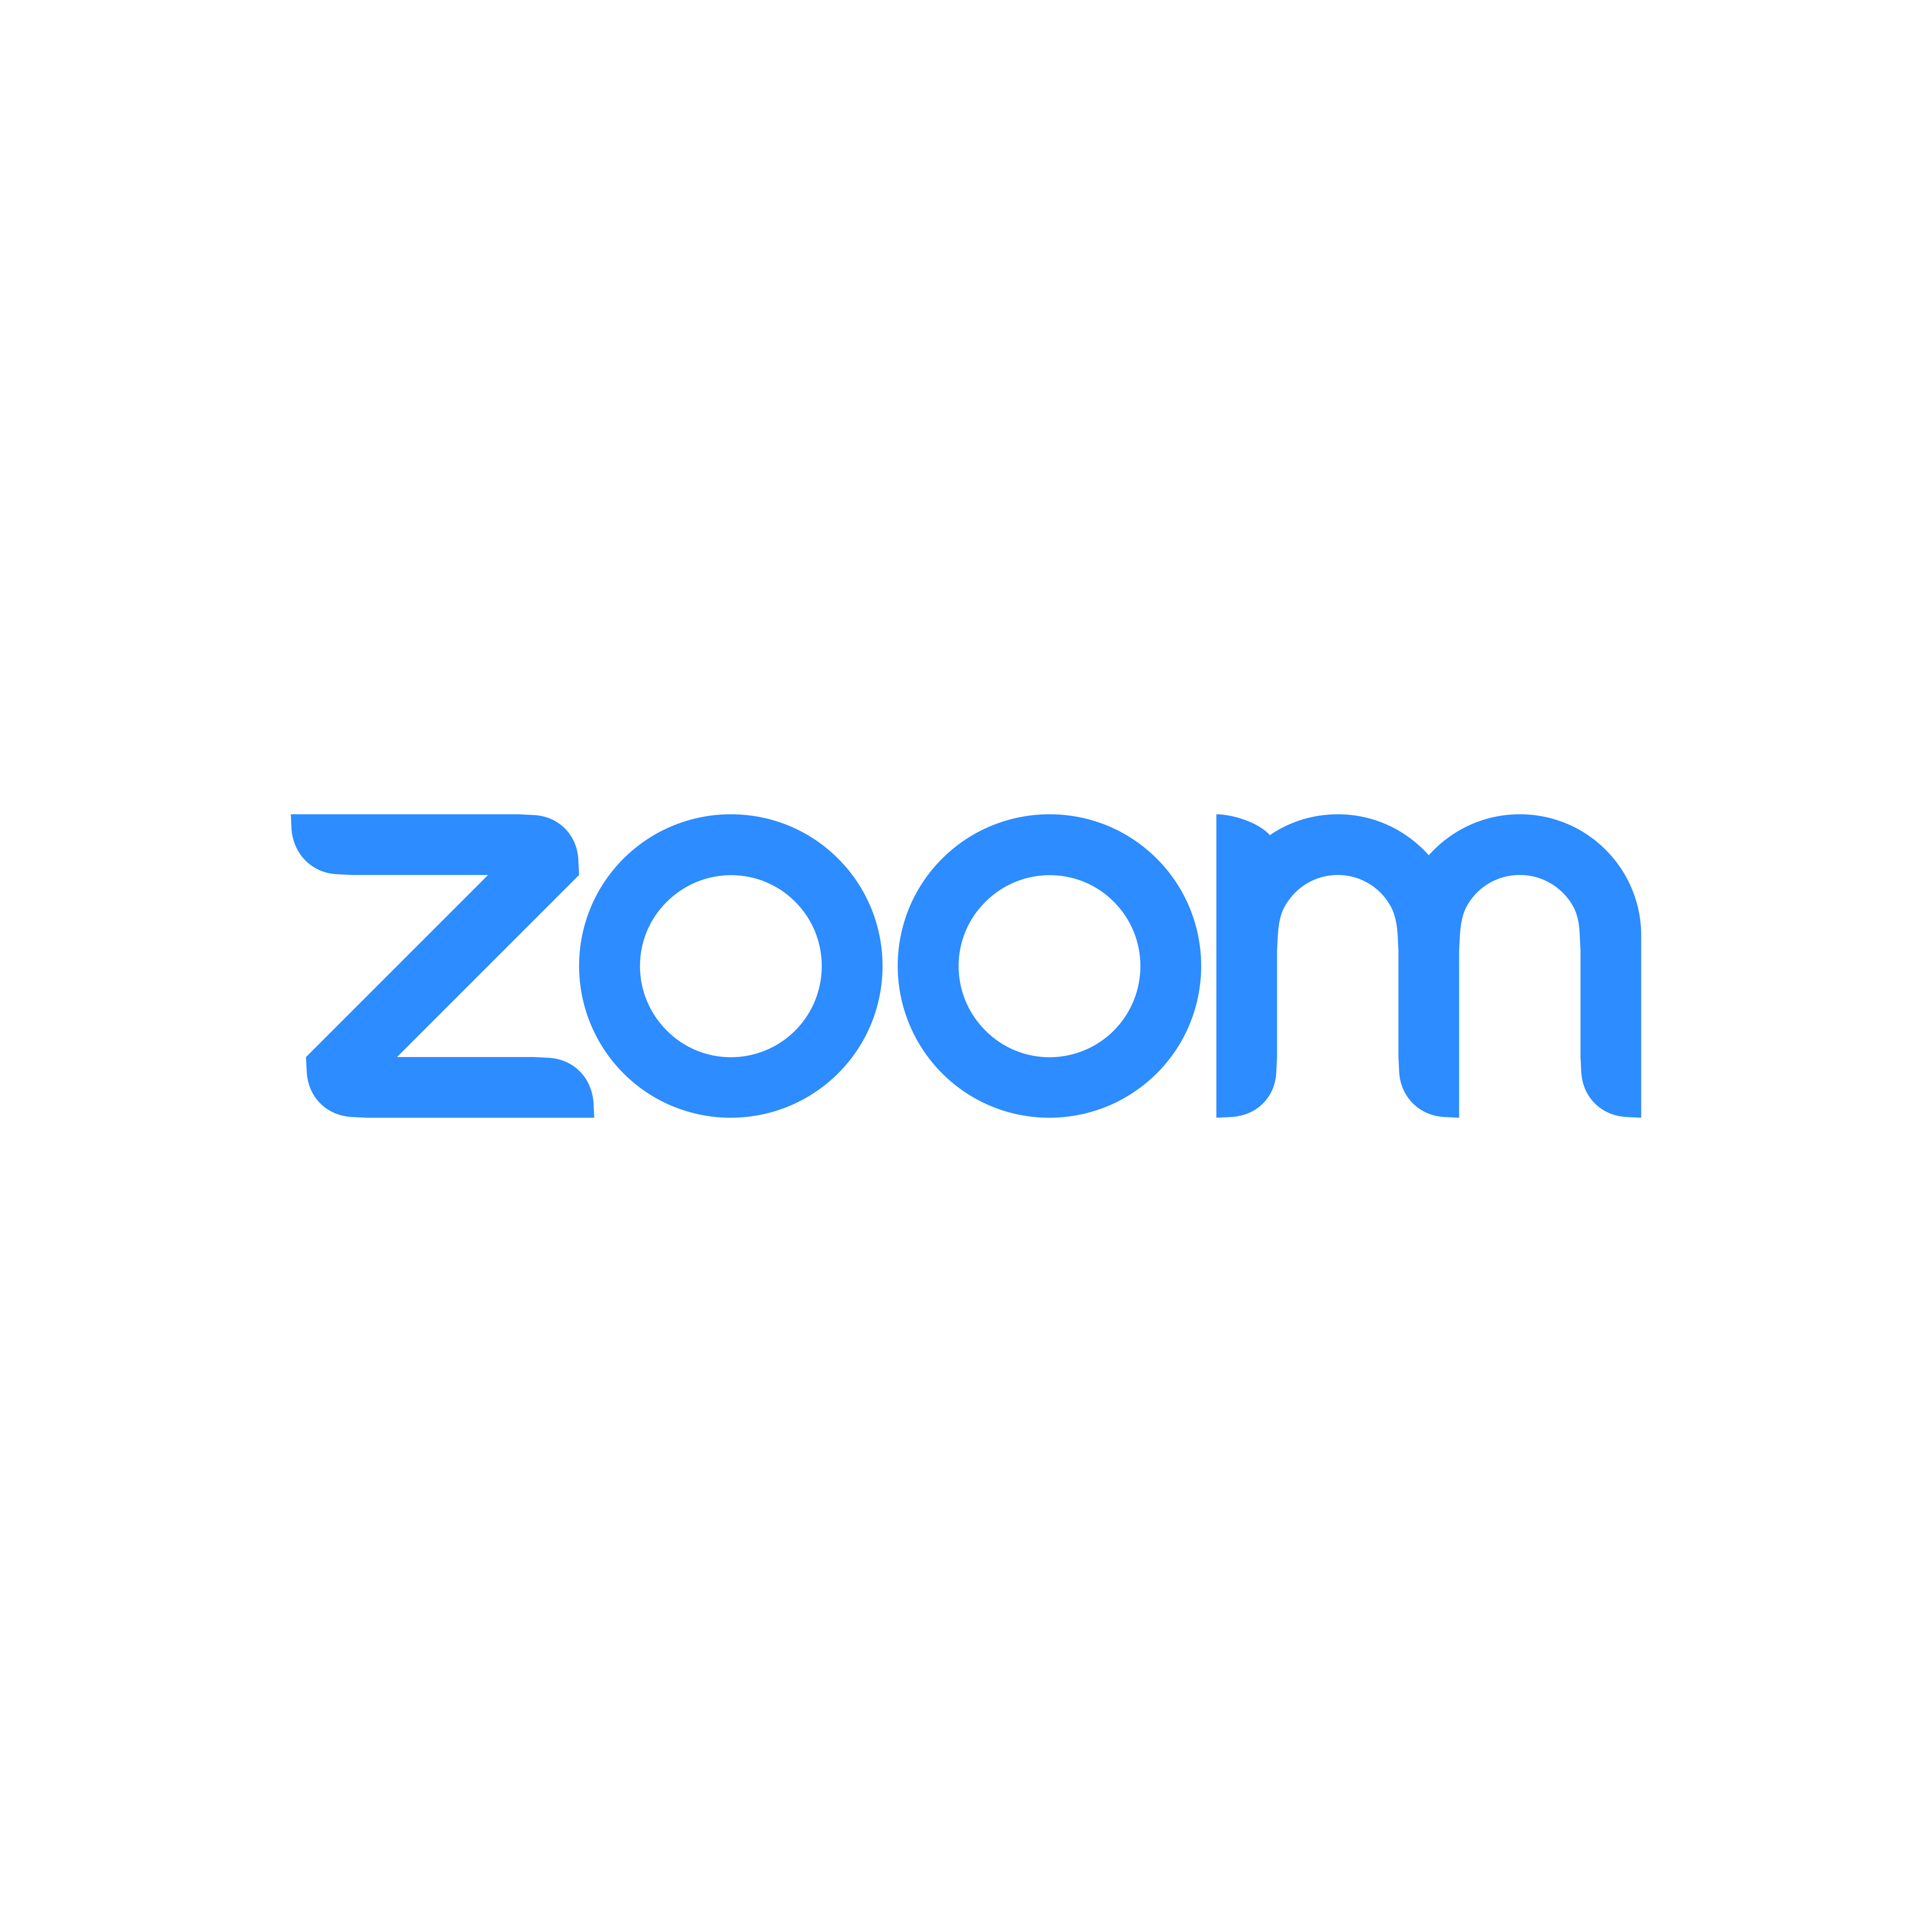 Zoom Logo Transparent Png - P